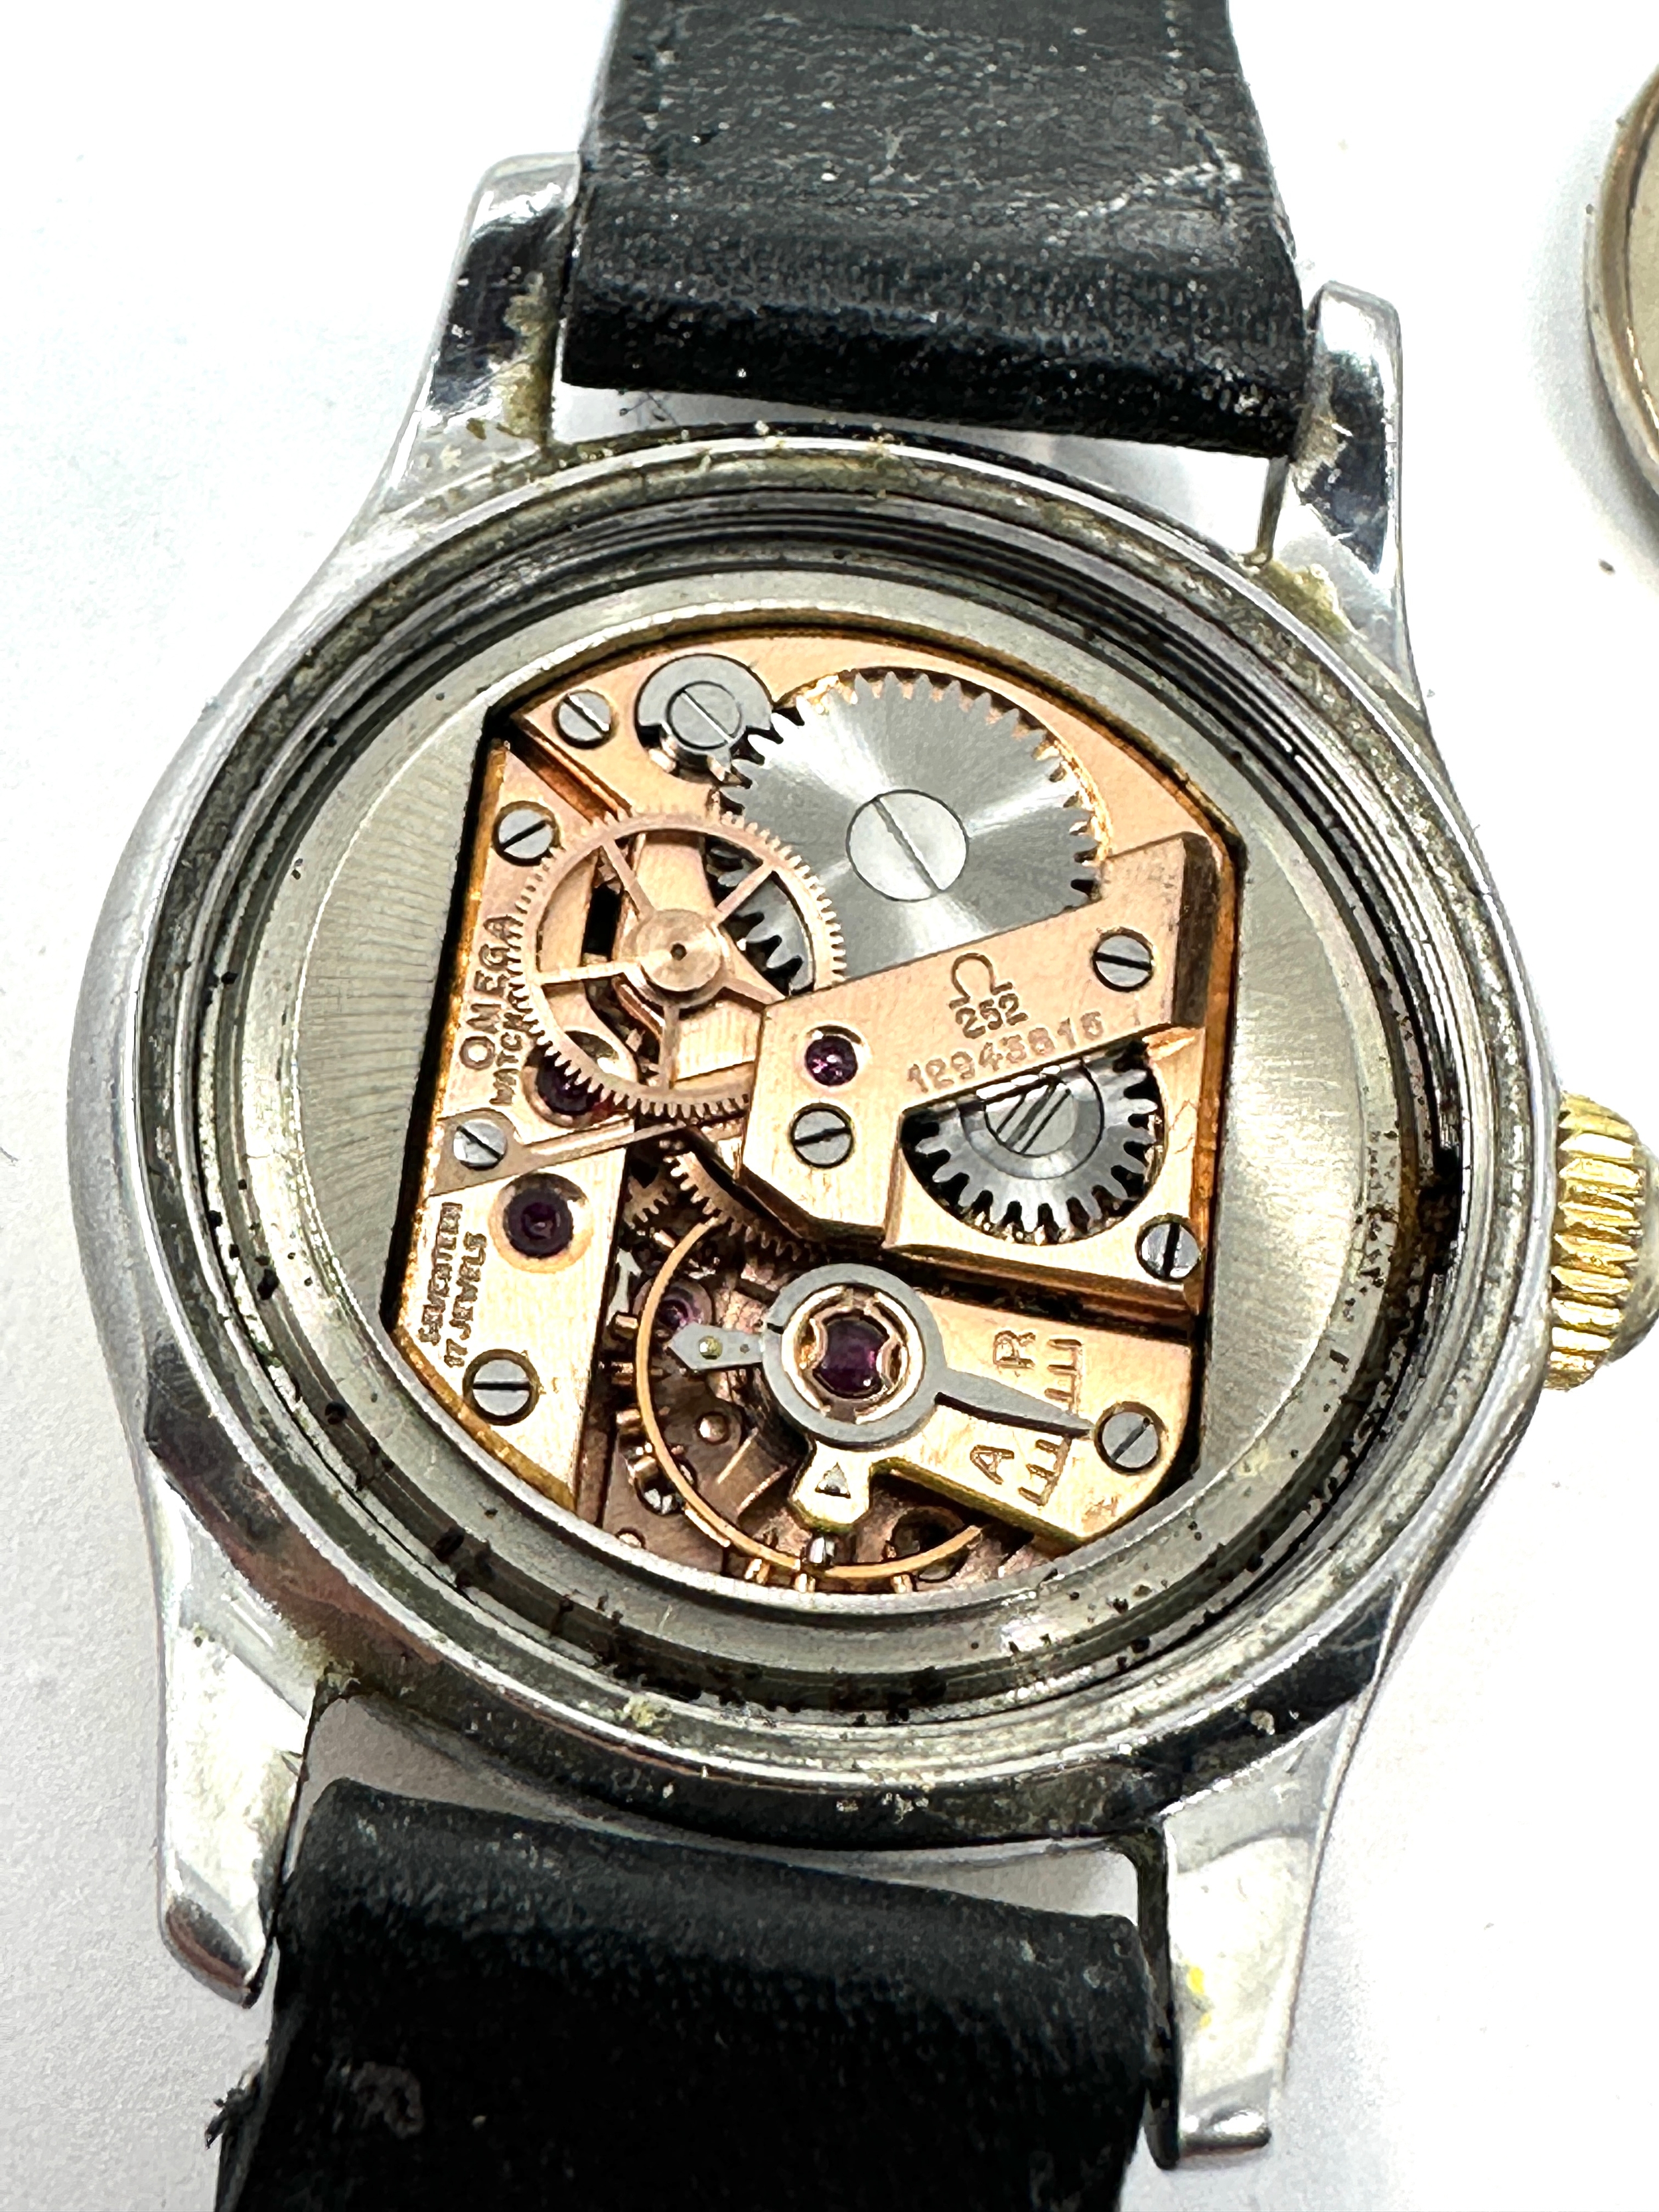 vintage ladies omega wristwatch cal 252 the watch ticks when shaken the winder keeps winding - Image 4 of 6